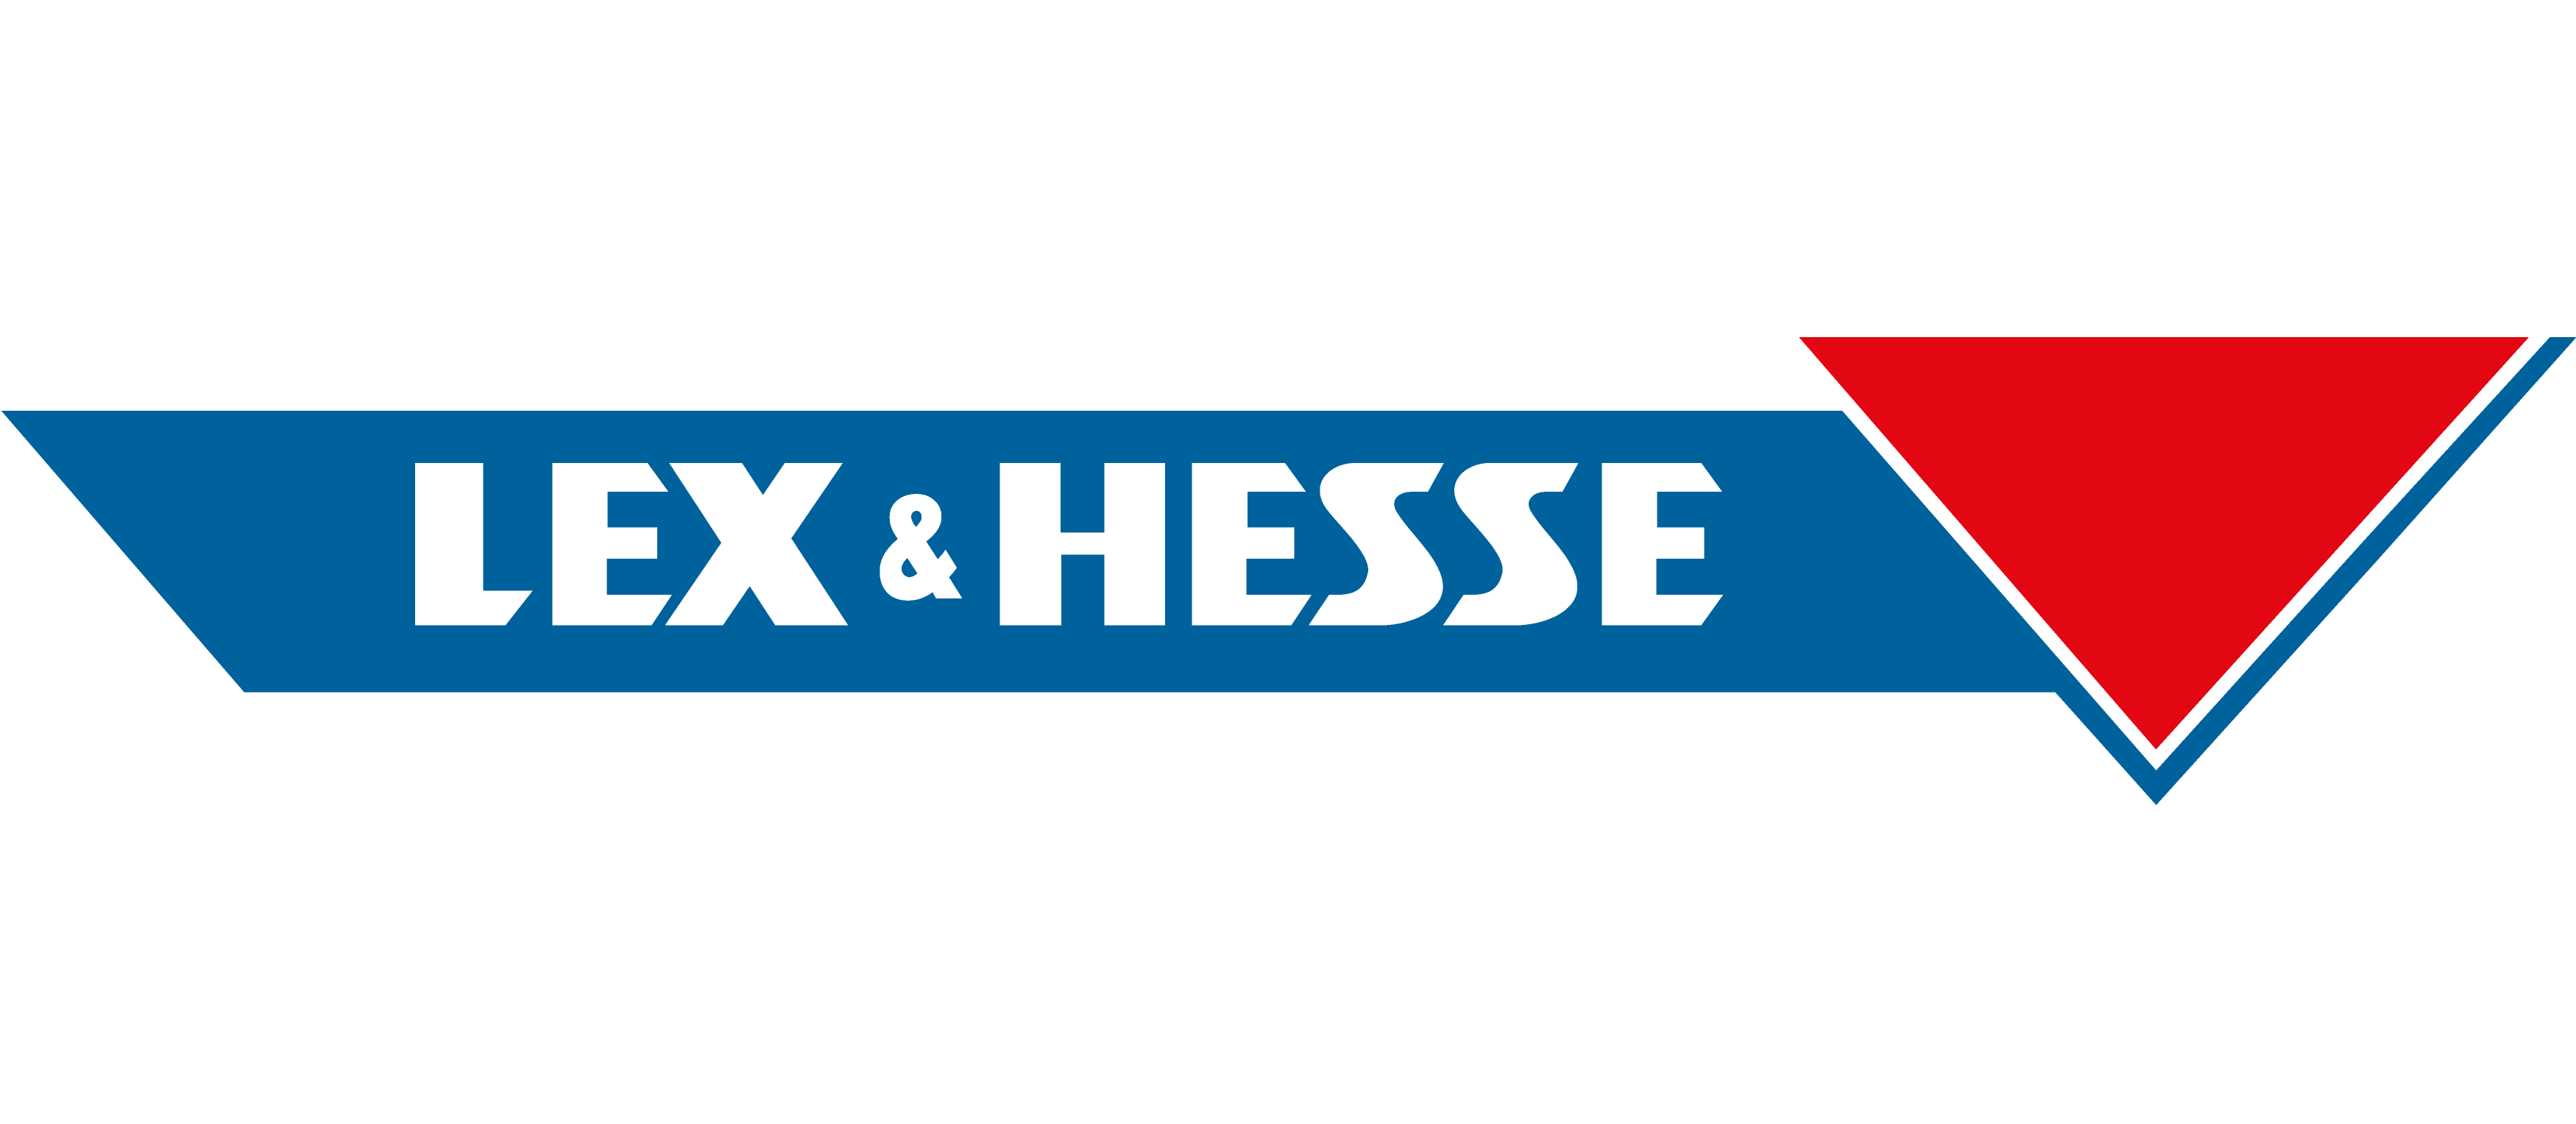 Lex & Hesse